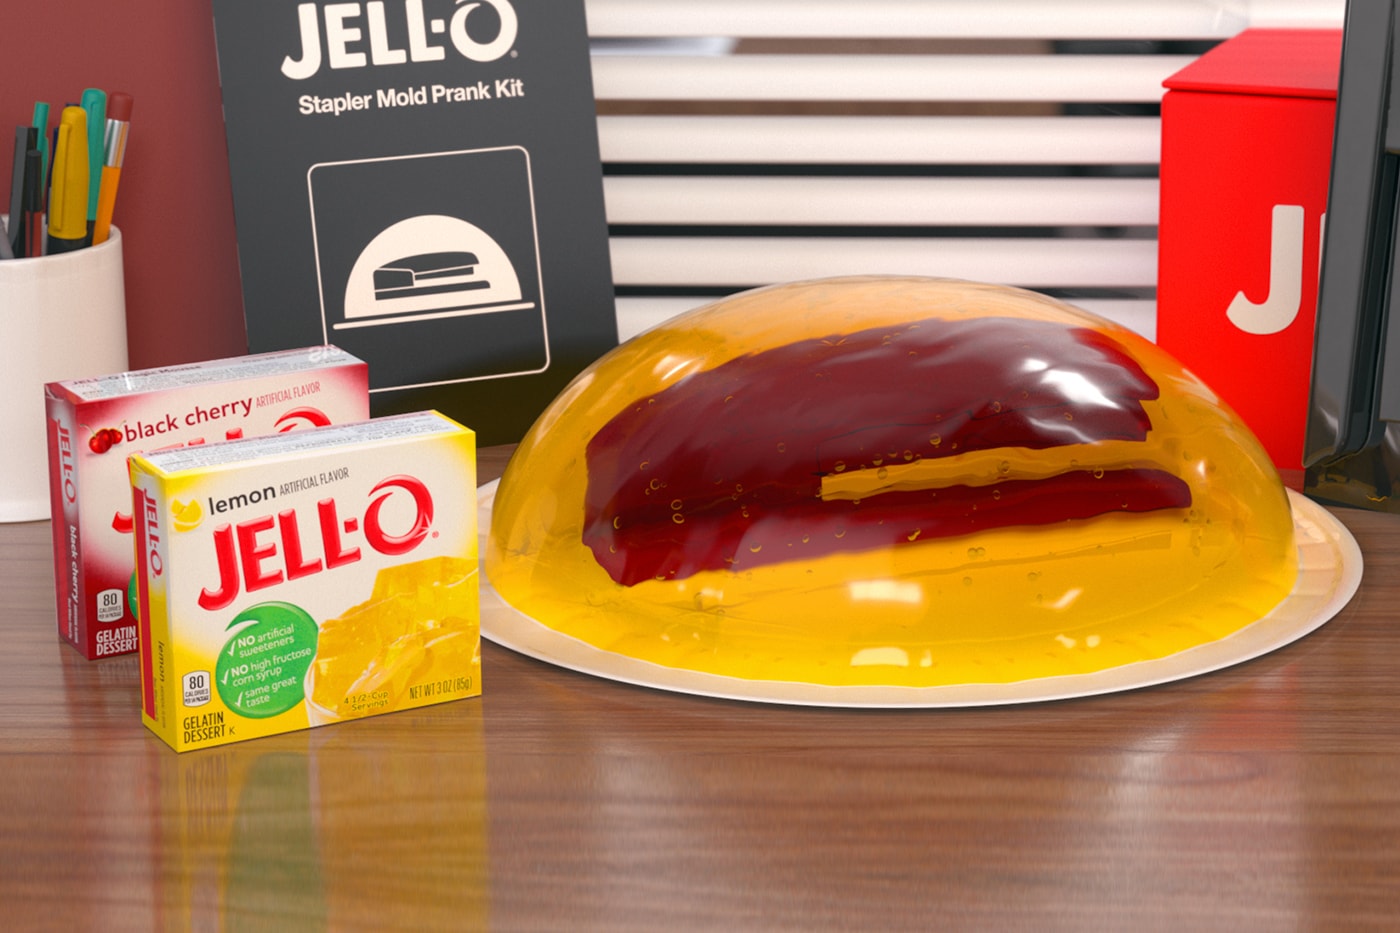 JELLO Office Stapler Mold Prank Kit release the offie dwight Schrute Jim Halpert food sweets dessert 